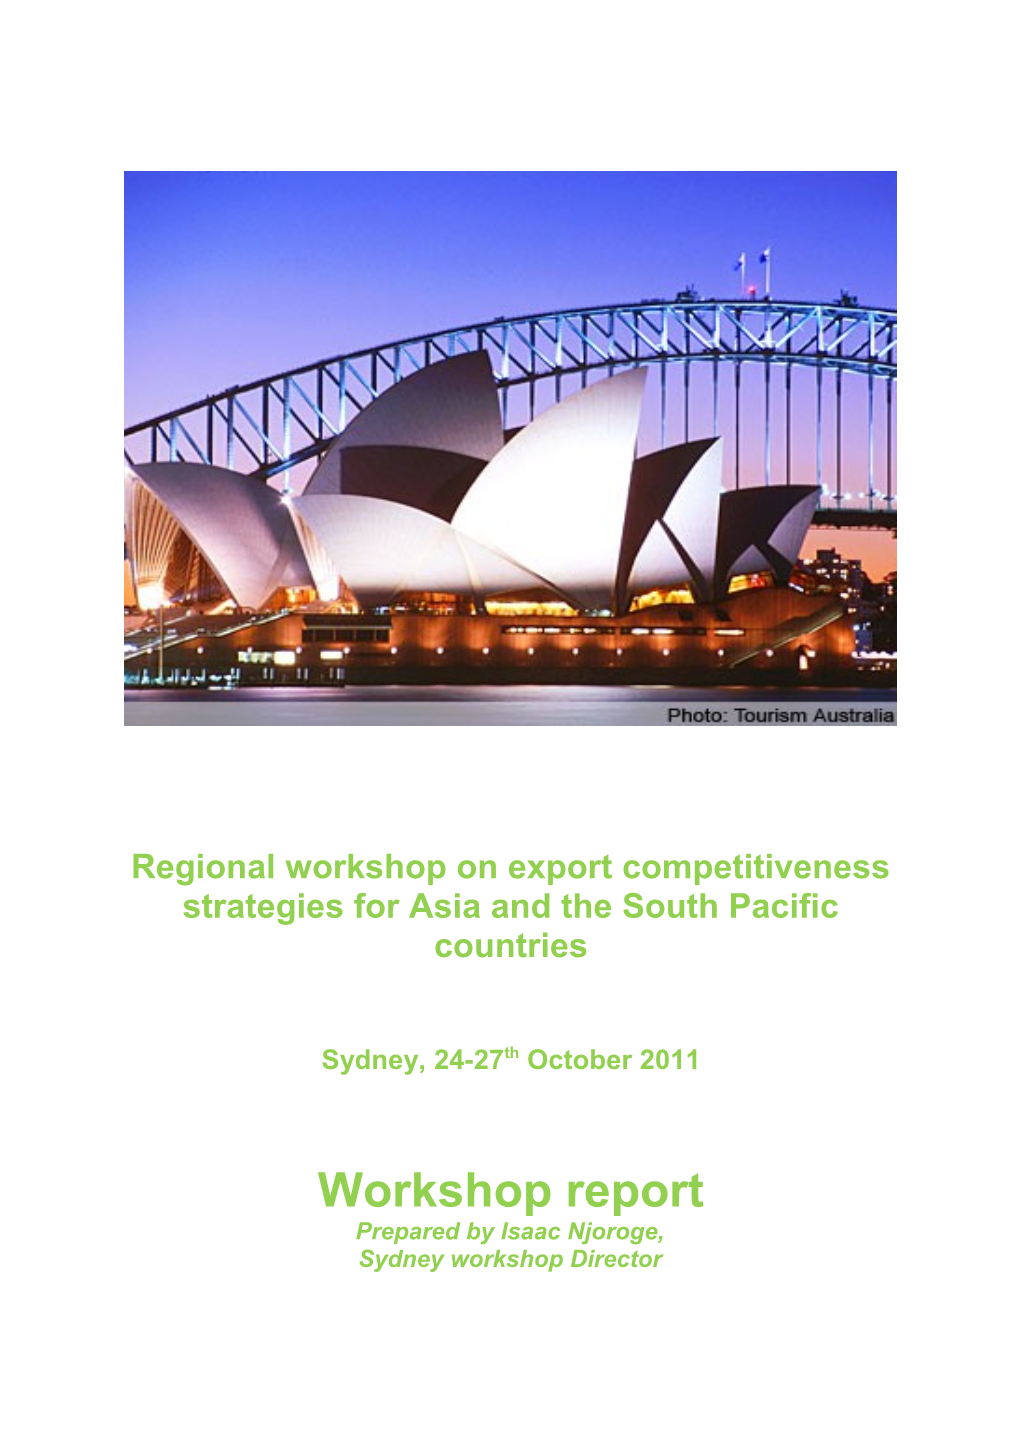 Regional Workshop on Export Competitiveness Strategies